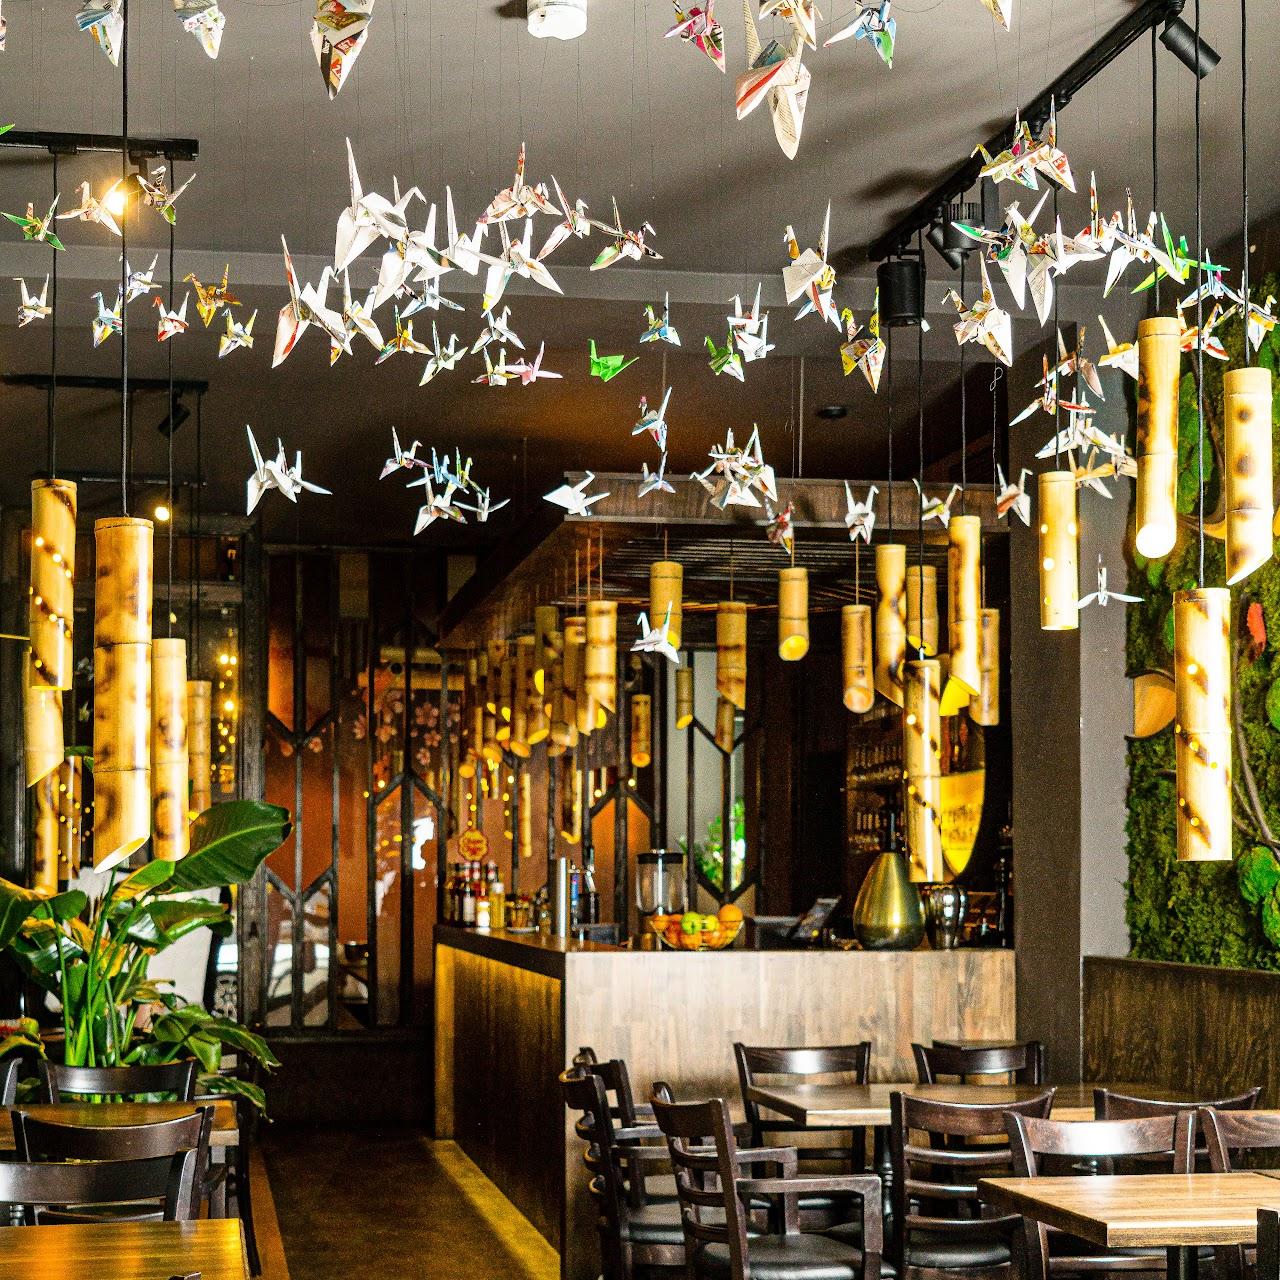 Restaurant "Bamboo Leaf" in Berlin